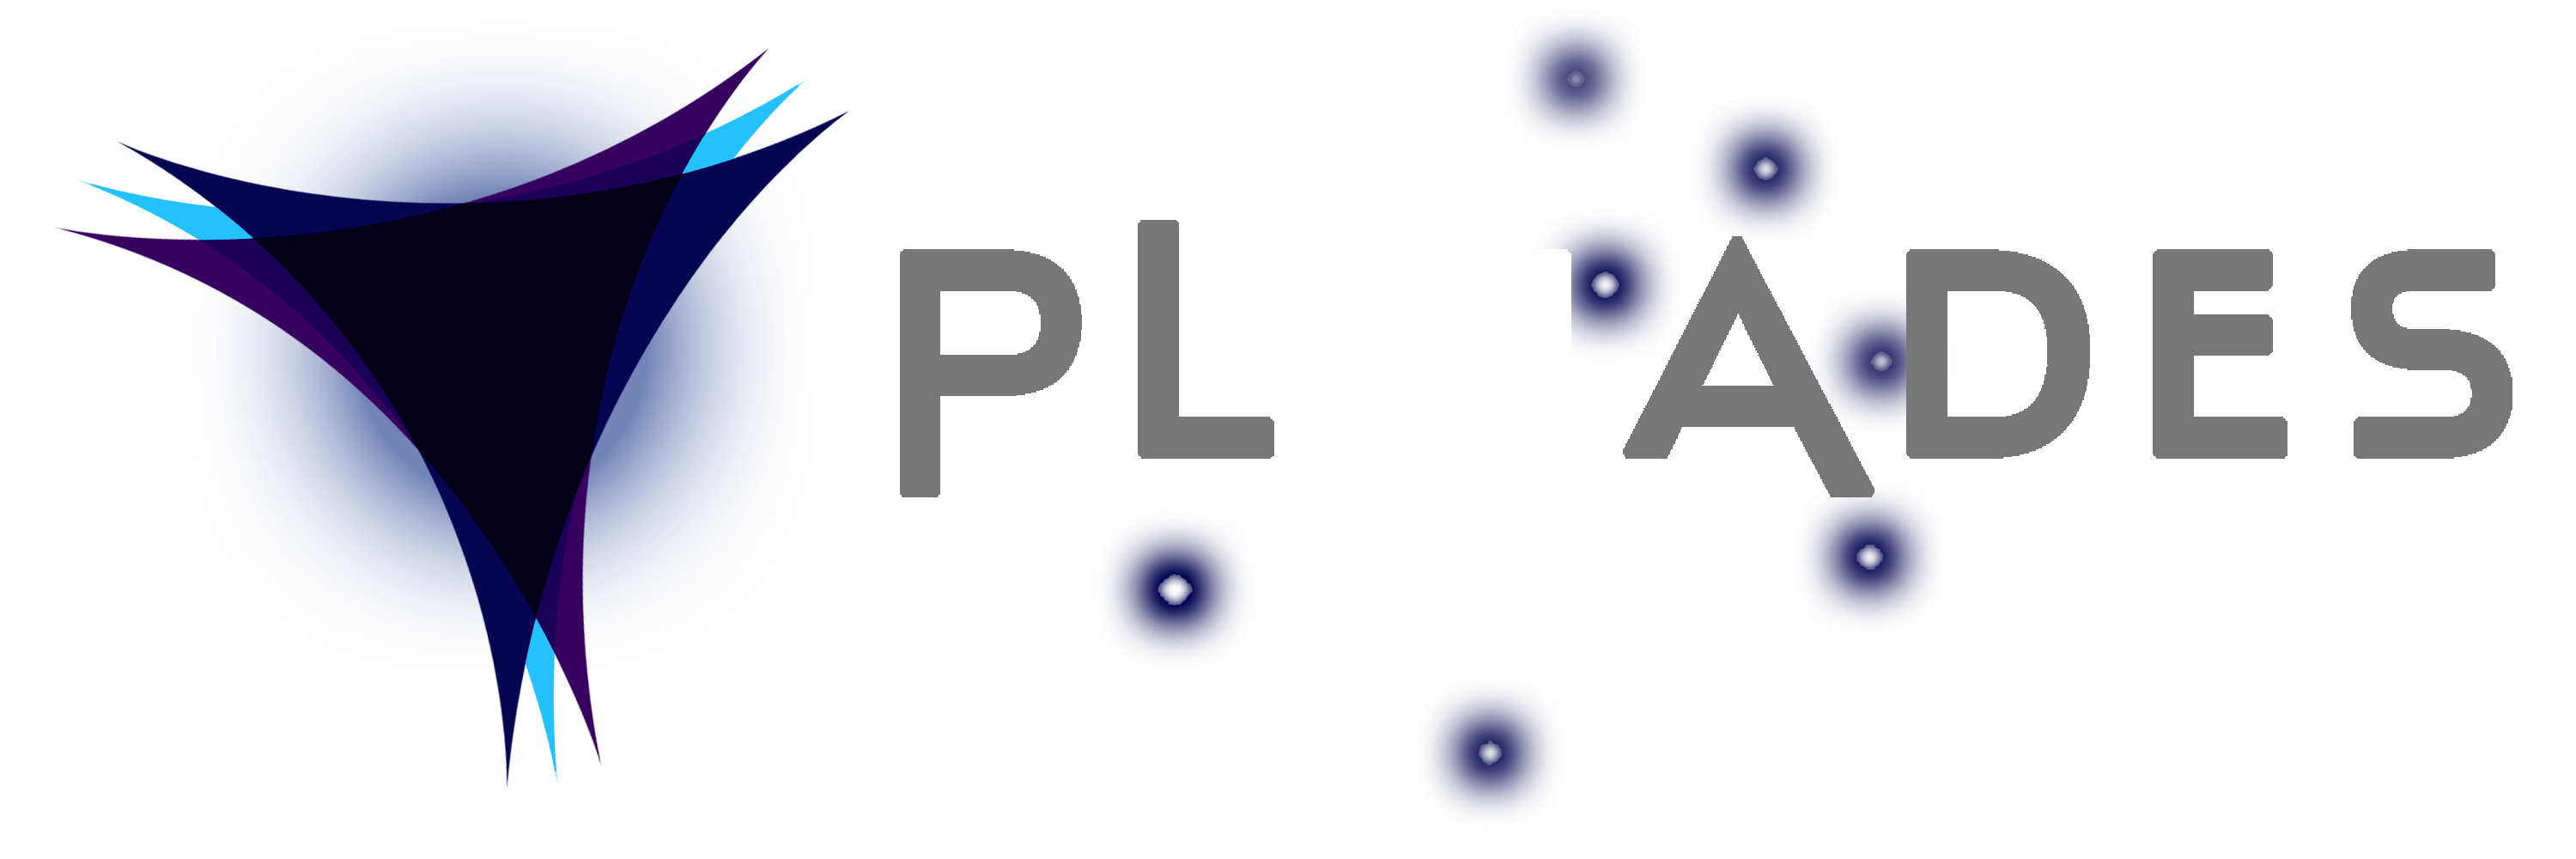 Pleiades 2019